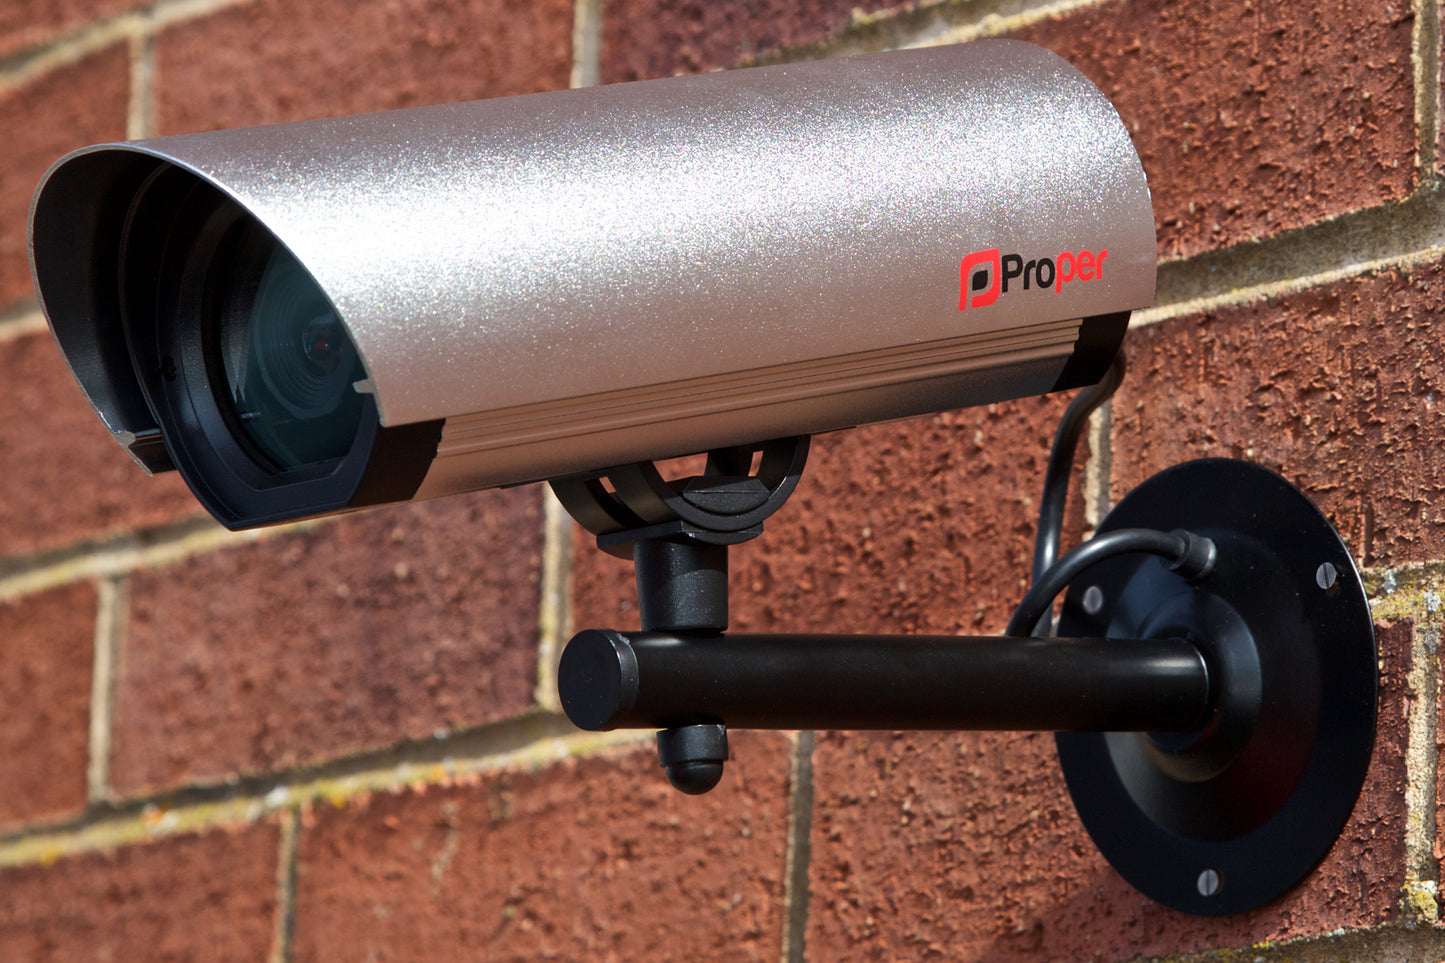 ProperAV Imitation Large 23cm Body Security Camera Aluminium with LED Light - Silver - maplin.co.uk